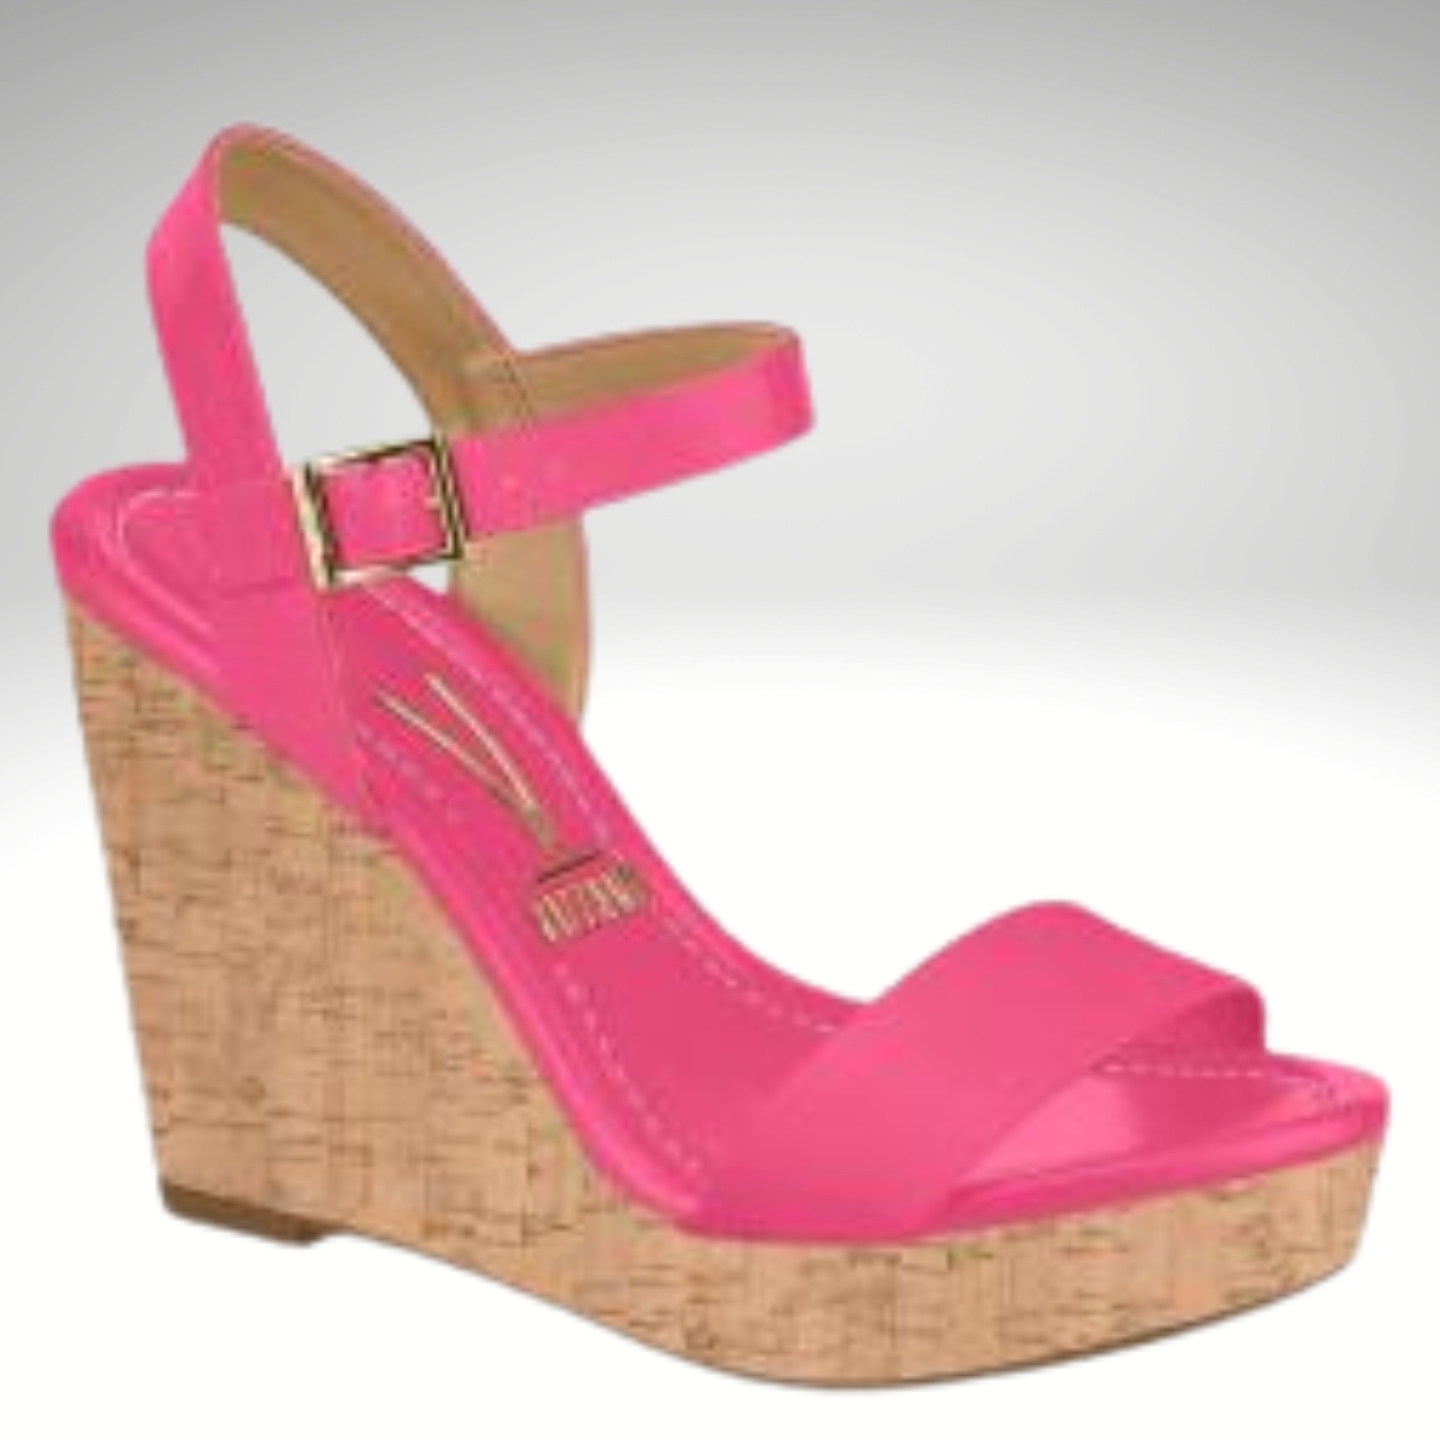 Roze sleehak sandalen met kurkzool | Fuchsia roze sleehakken